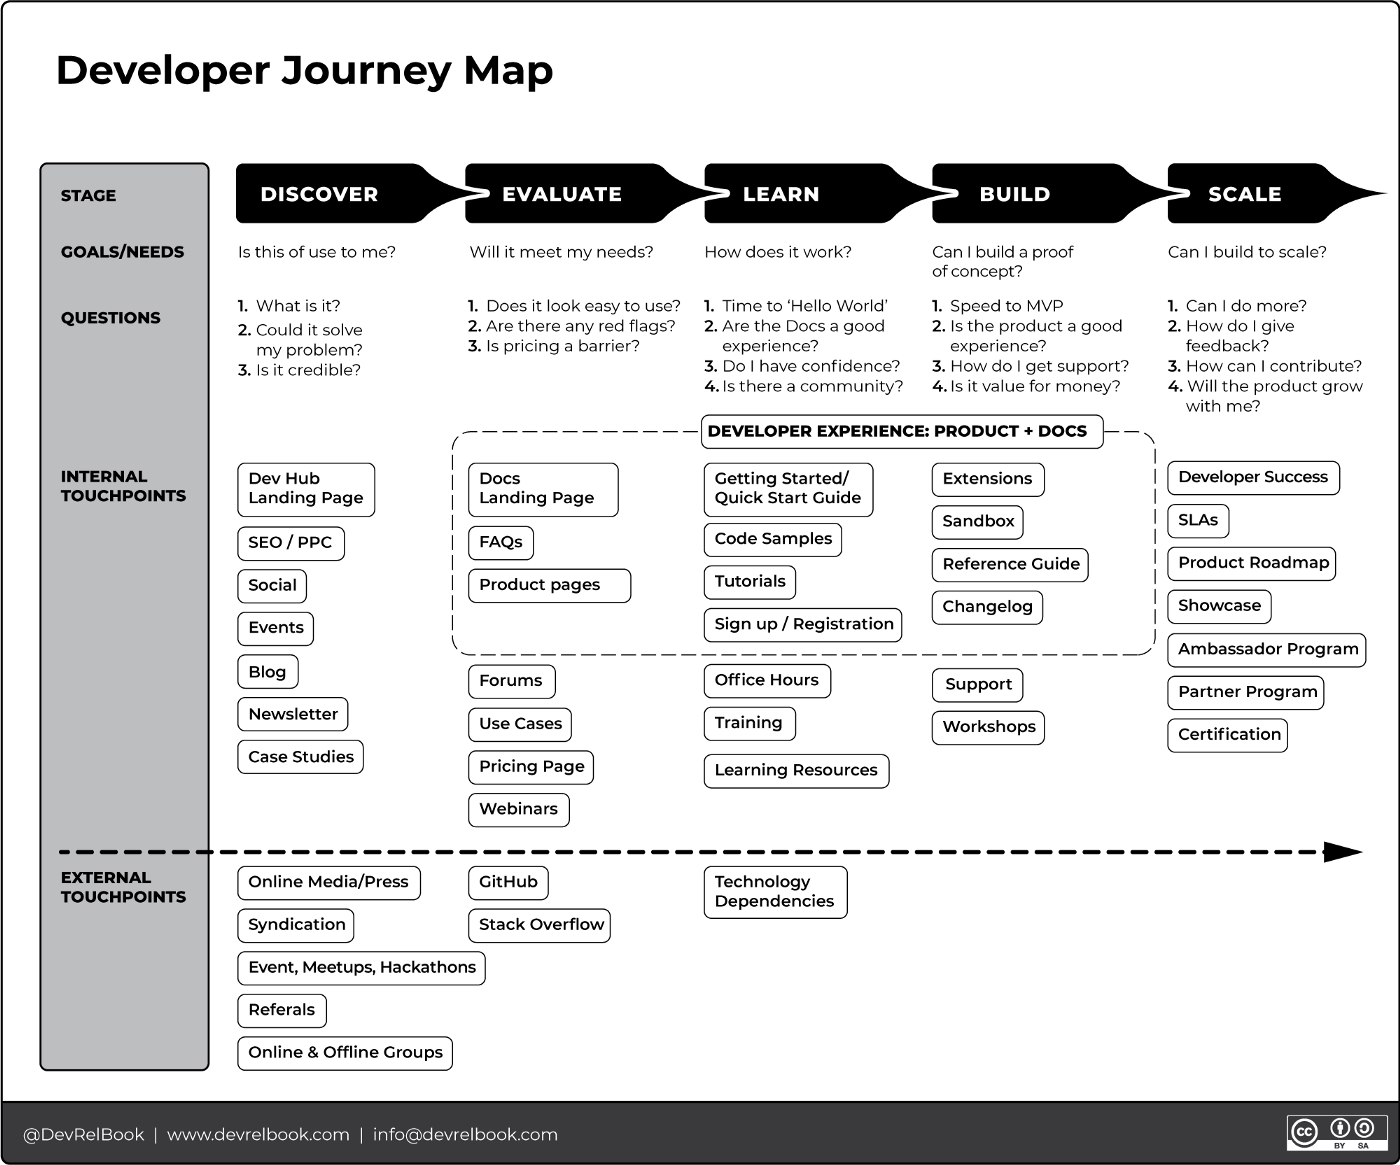 Developer User Journey by The DevRel Book